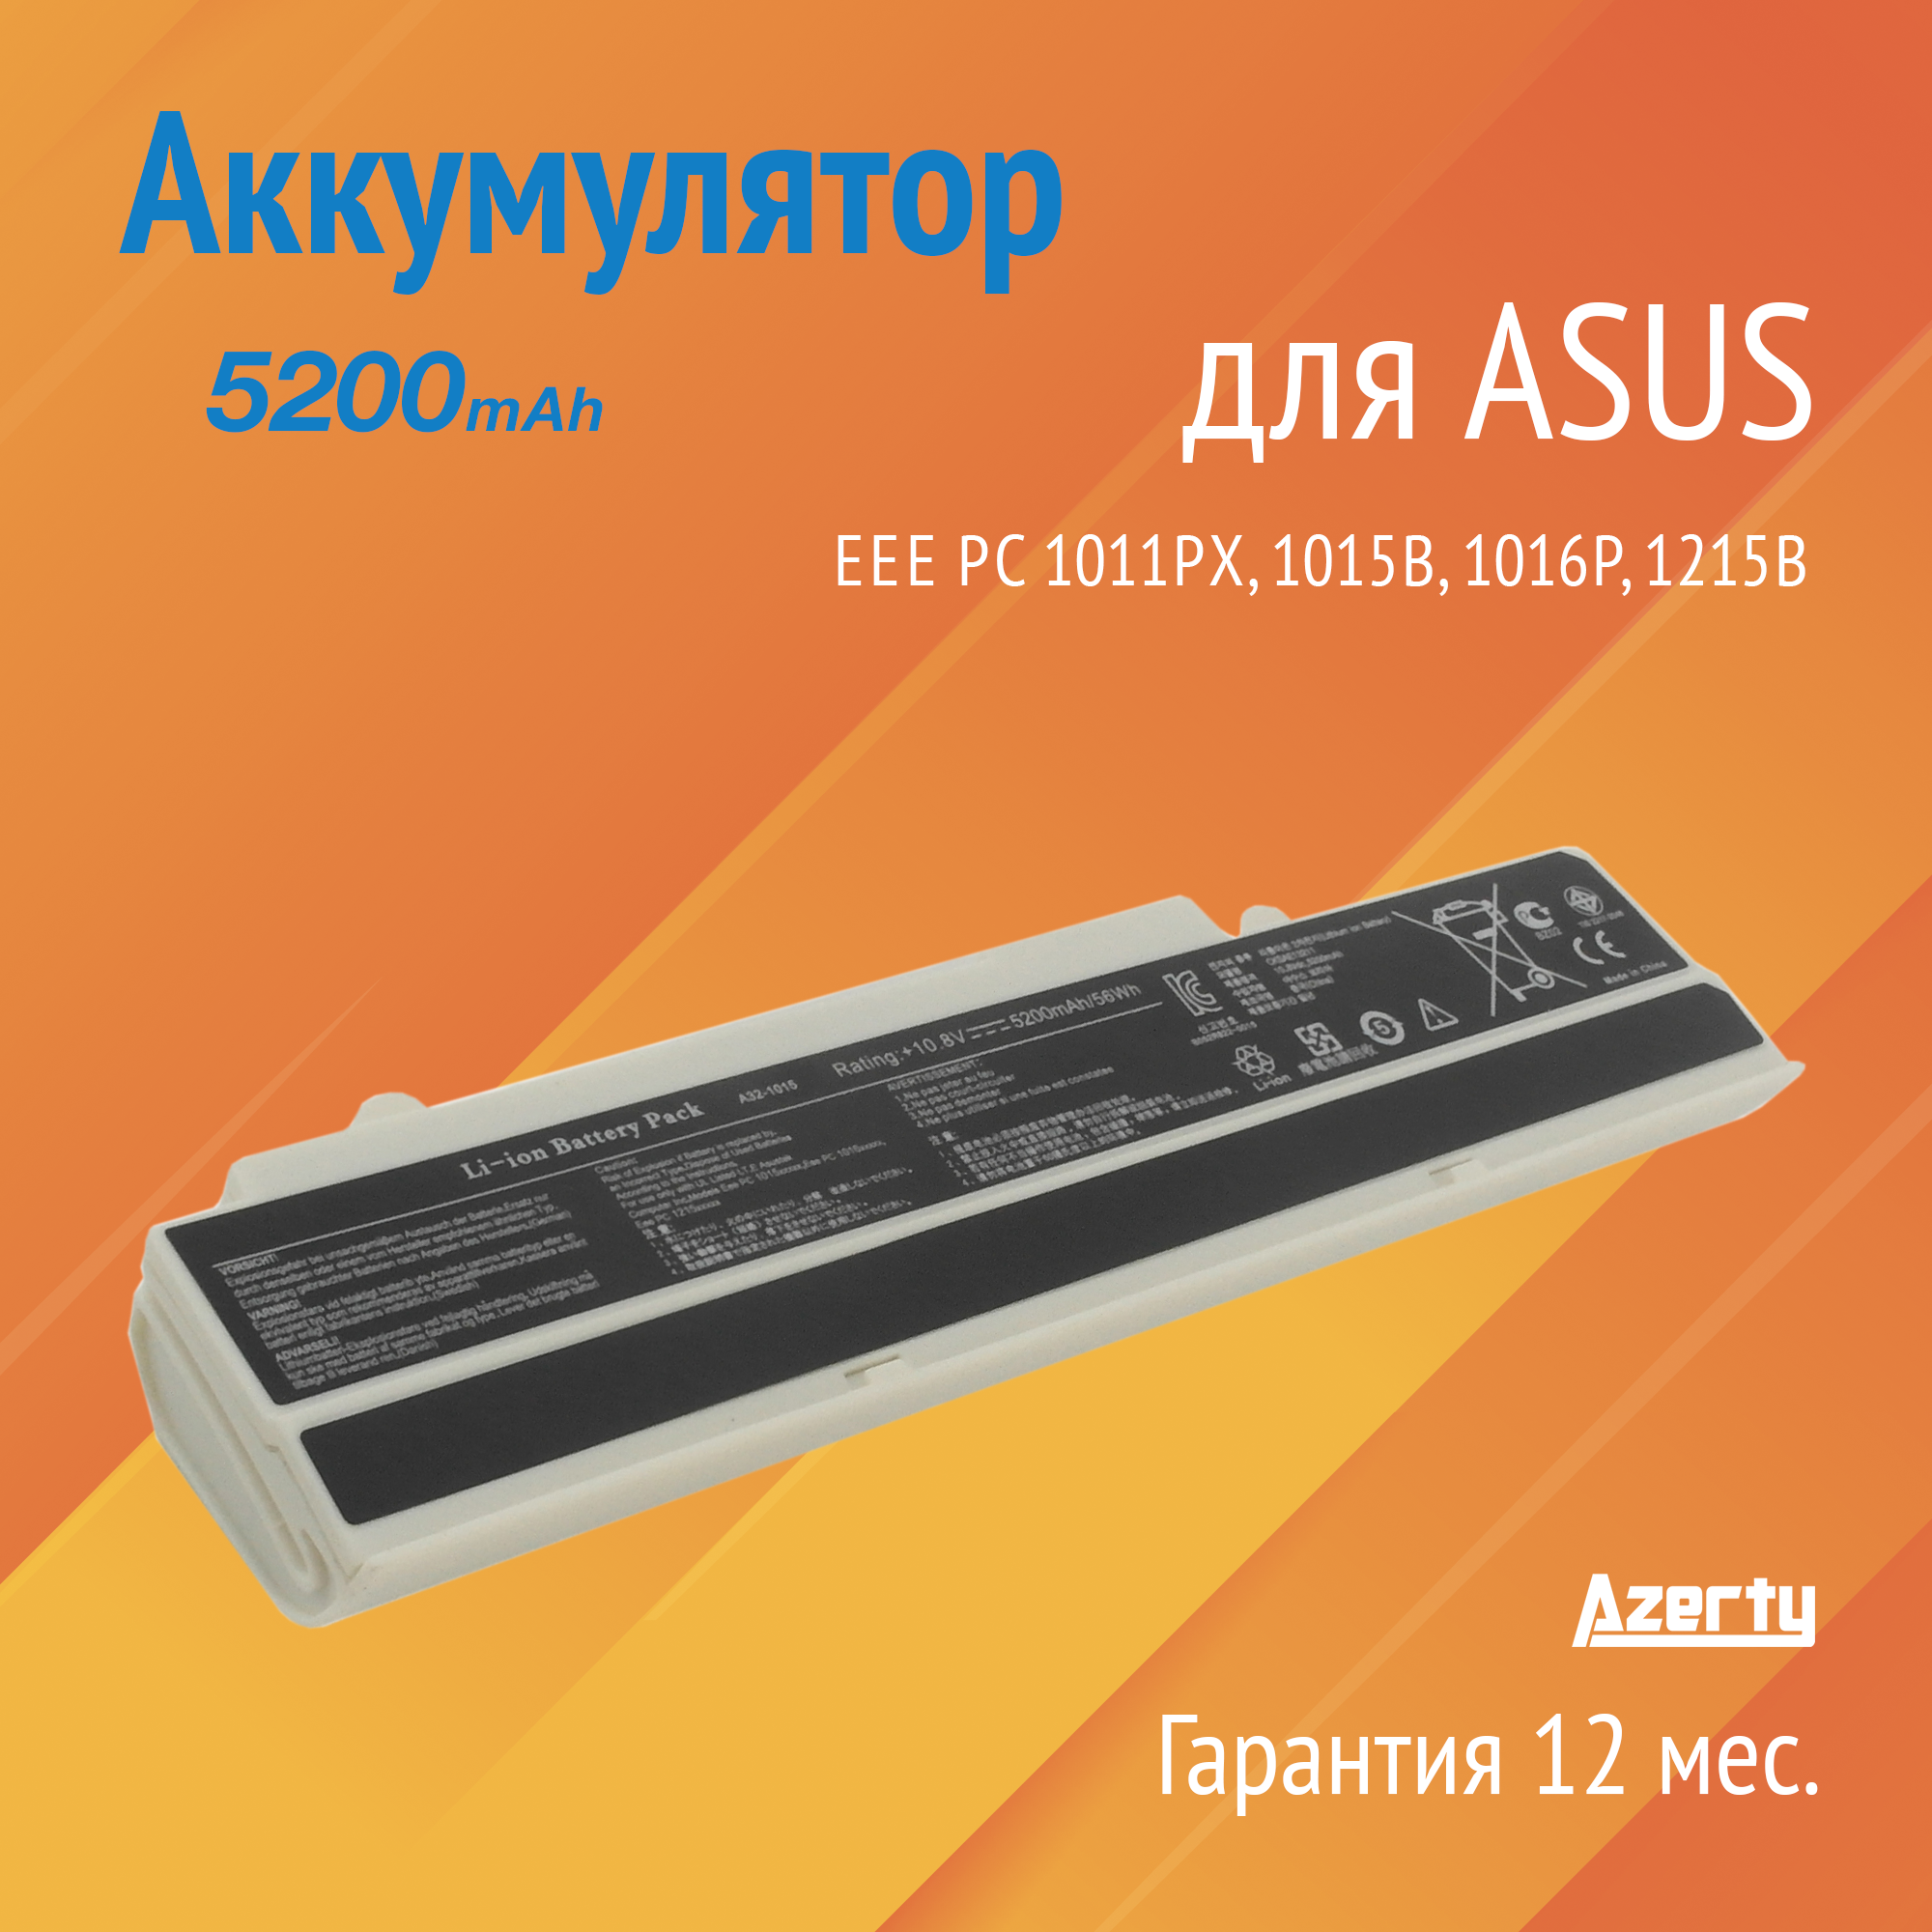 Аккумулятор A32-1015 для Asus Eee PC 1011PX / 1015B / 1016P / 1215B (A31-1015 PL32-1015) белый